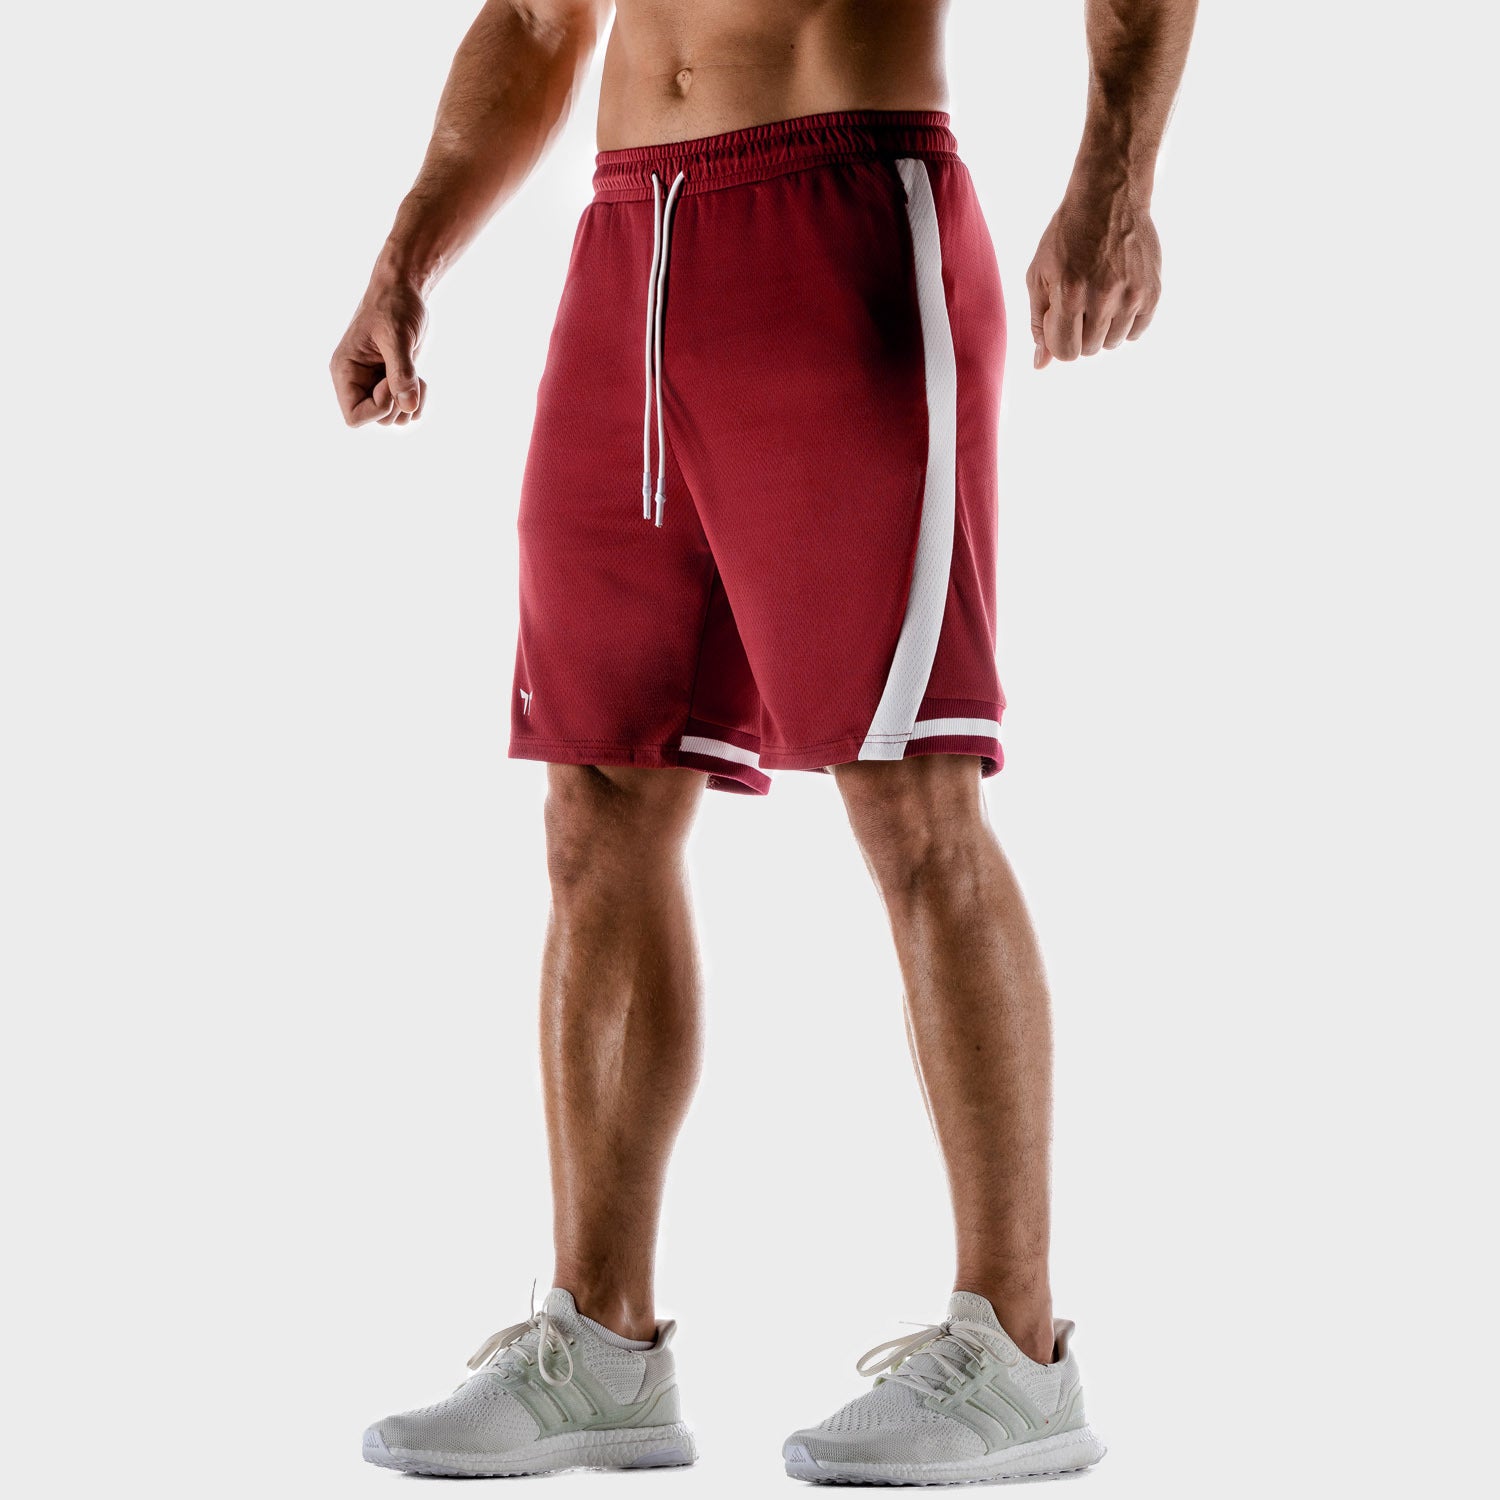 squatwolf-workout-short-for-men-hybrid-performance-shorts-maroon-gym-wear